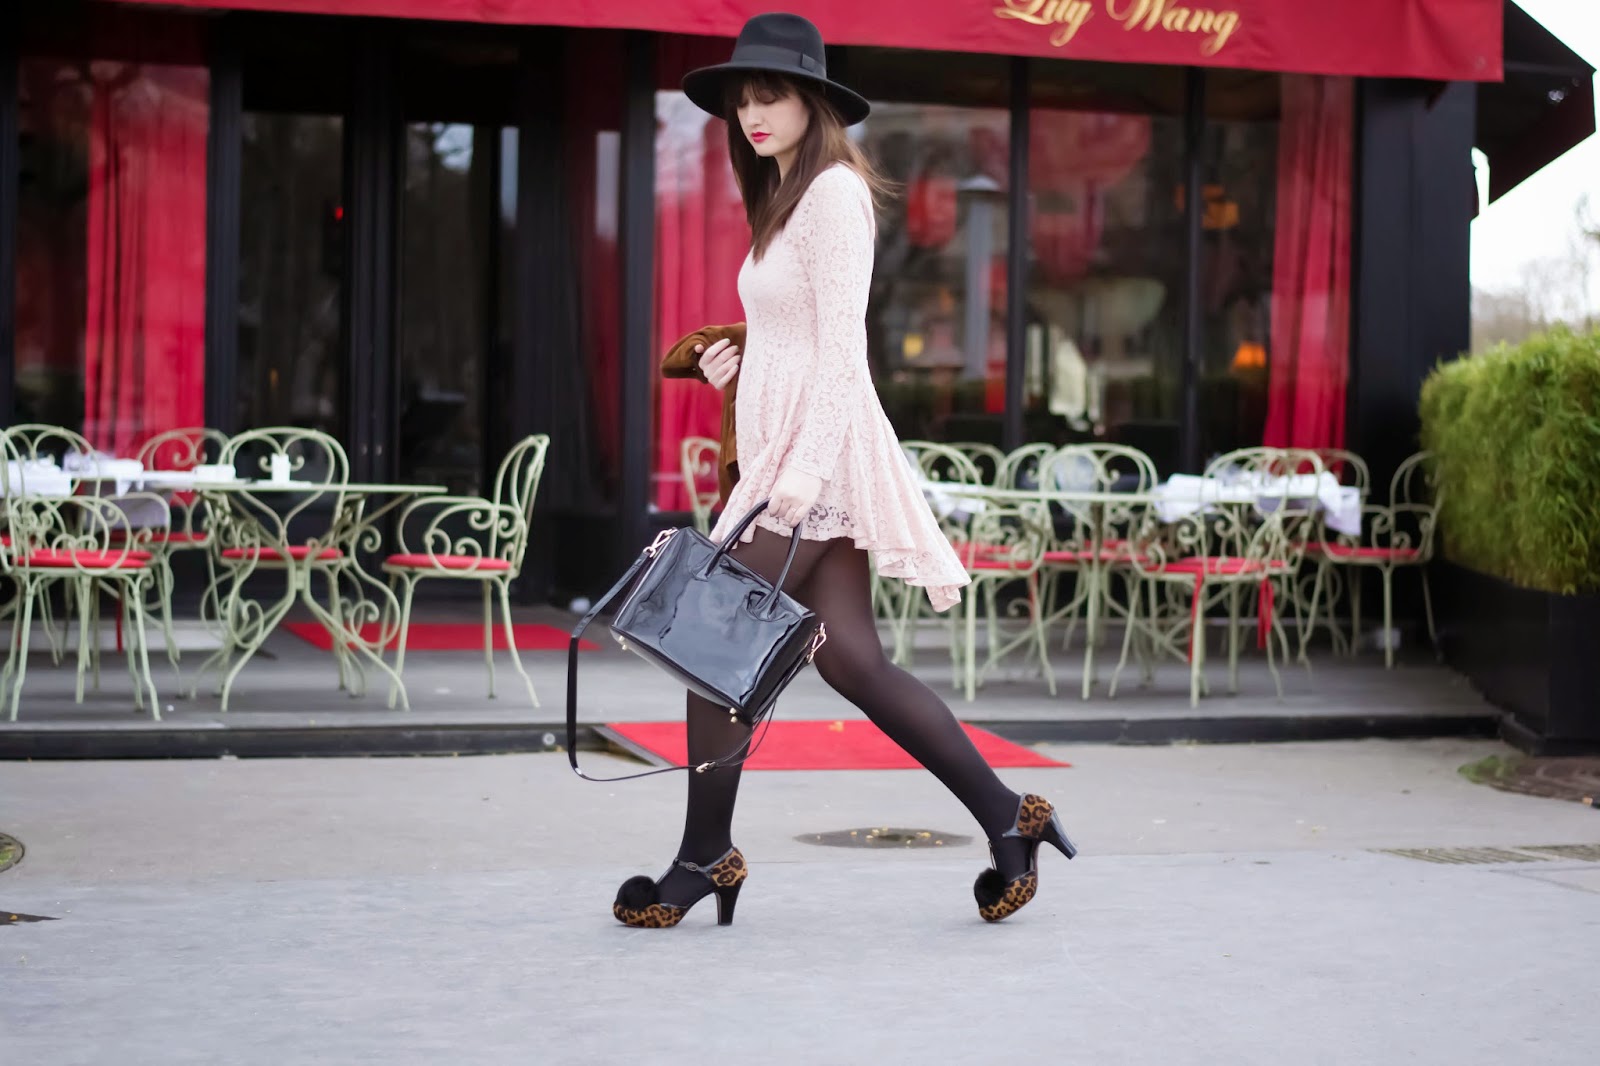 Parisian fashion blogger